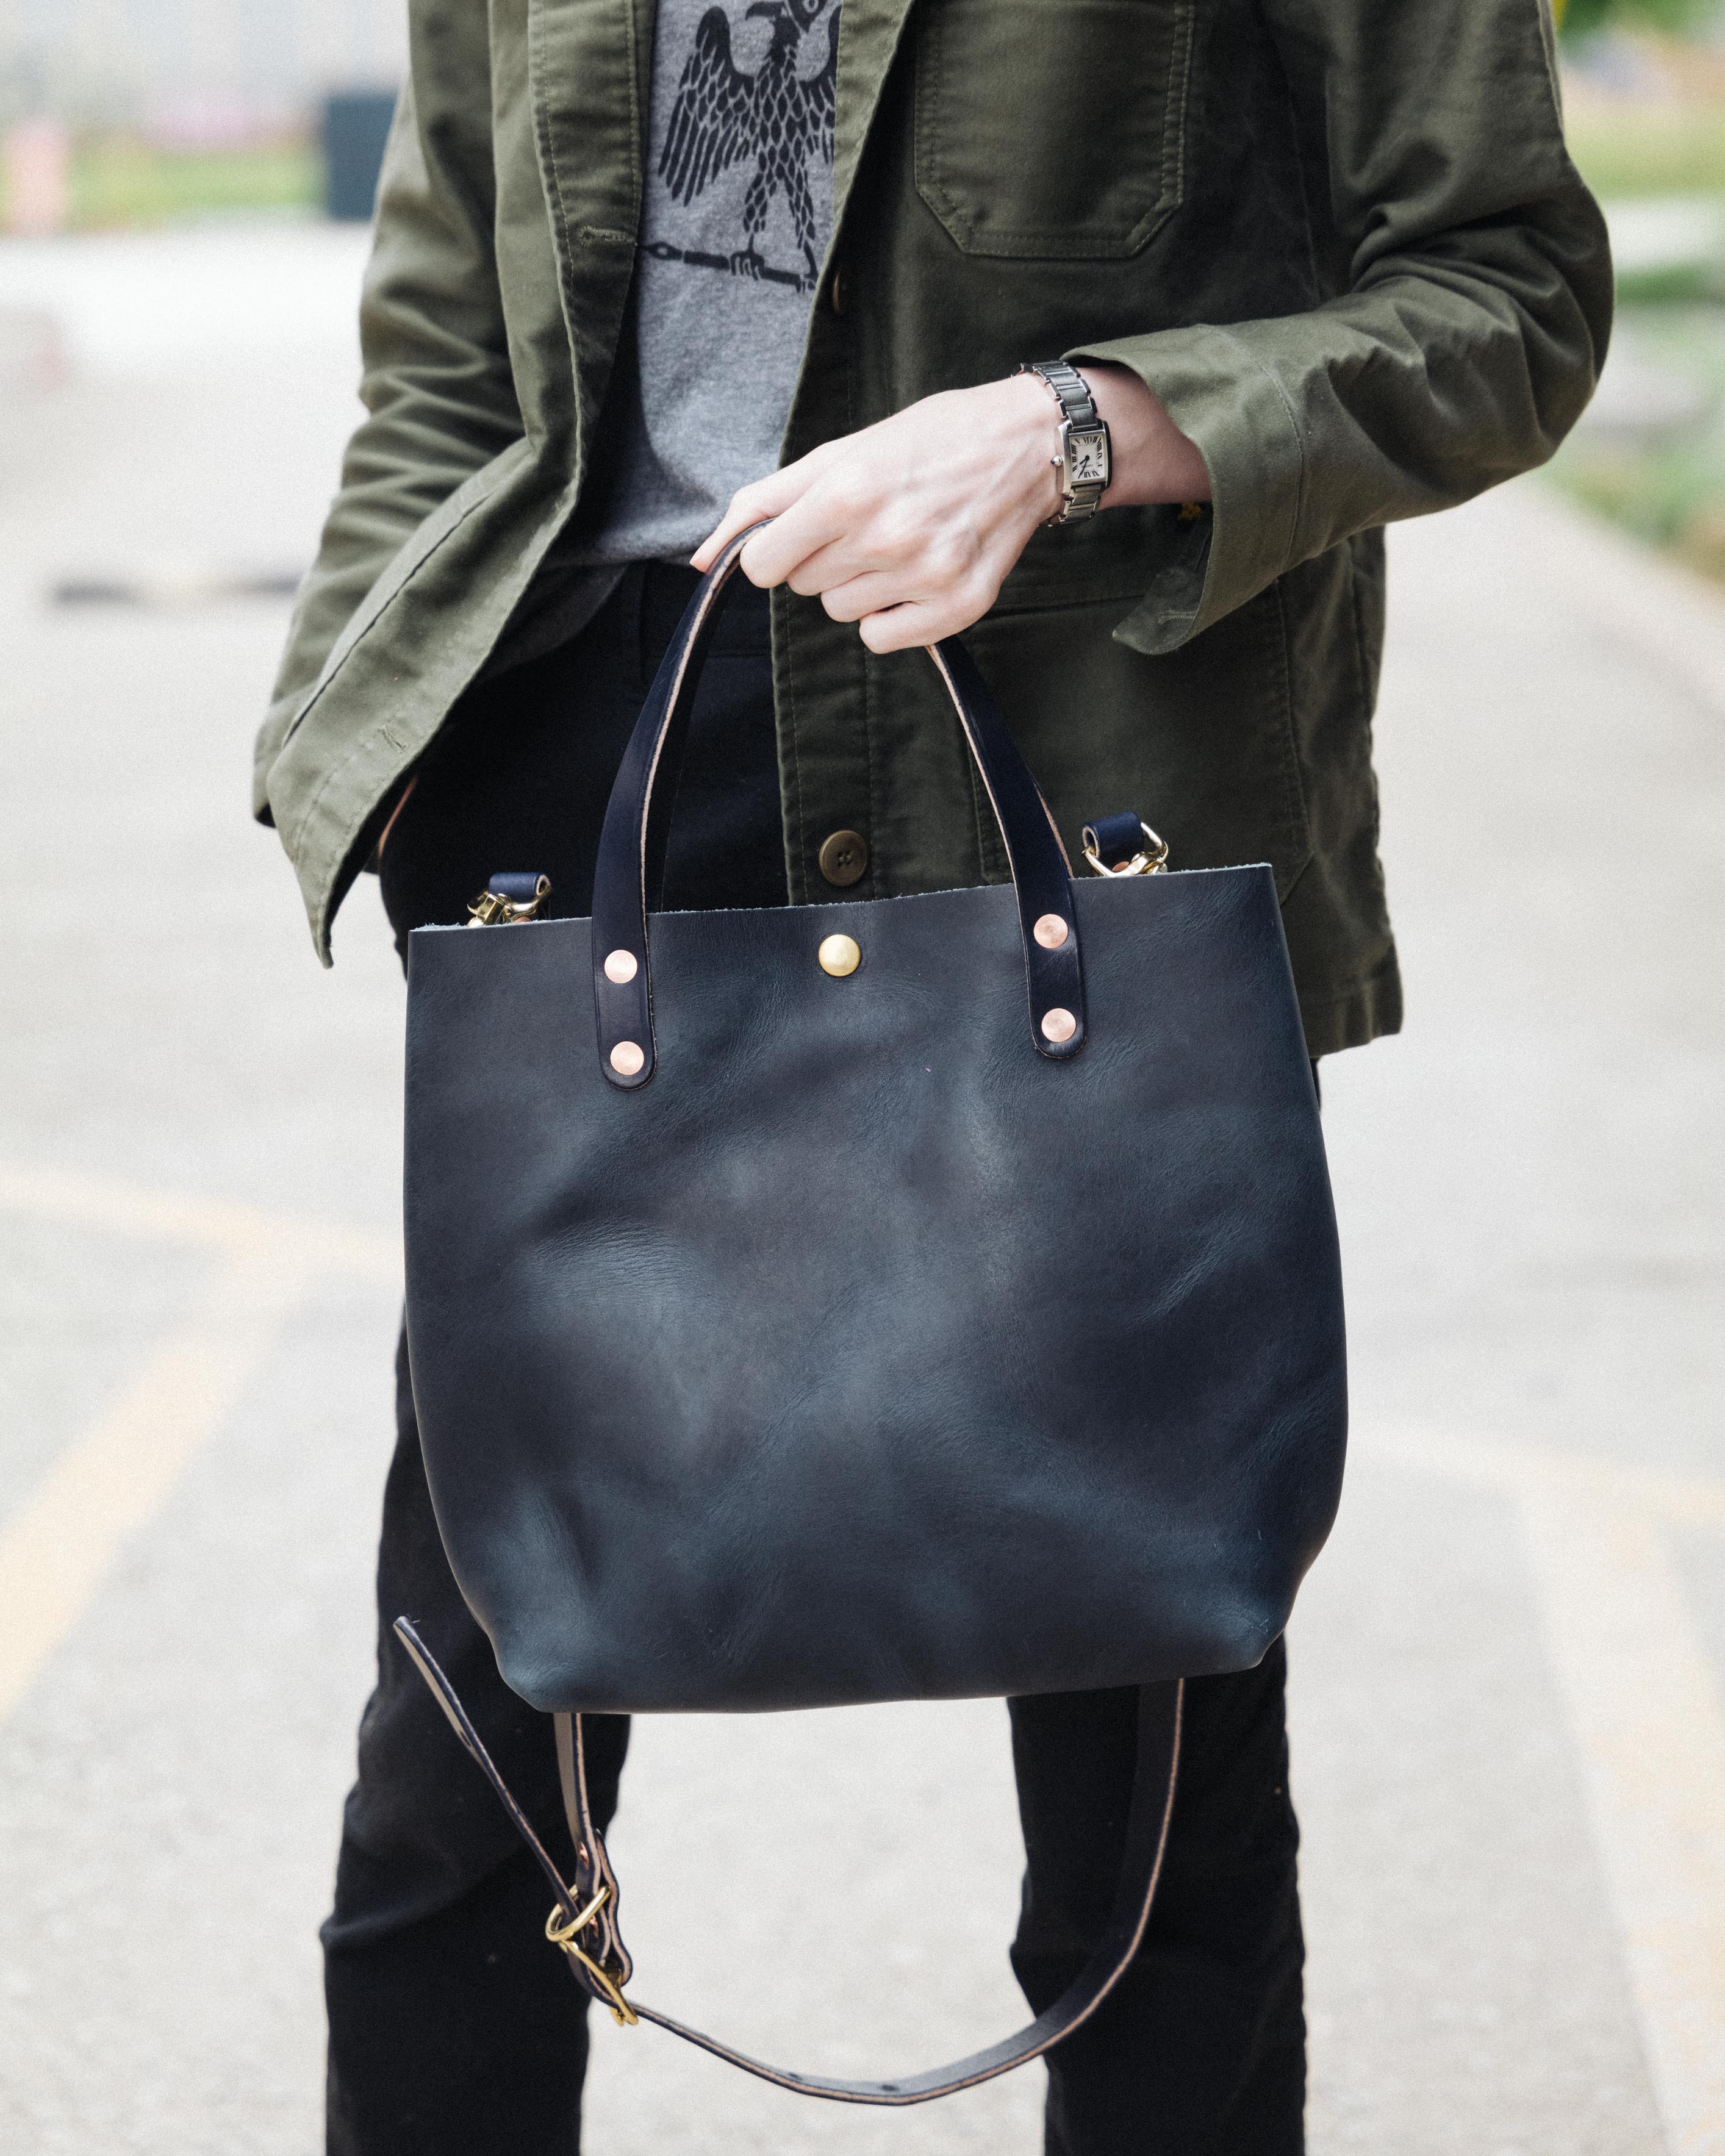 How To Make A DIY Leather Crossbody Bag | Diy leather bag, Leather diy,  Sewing leather